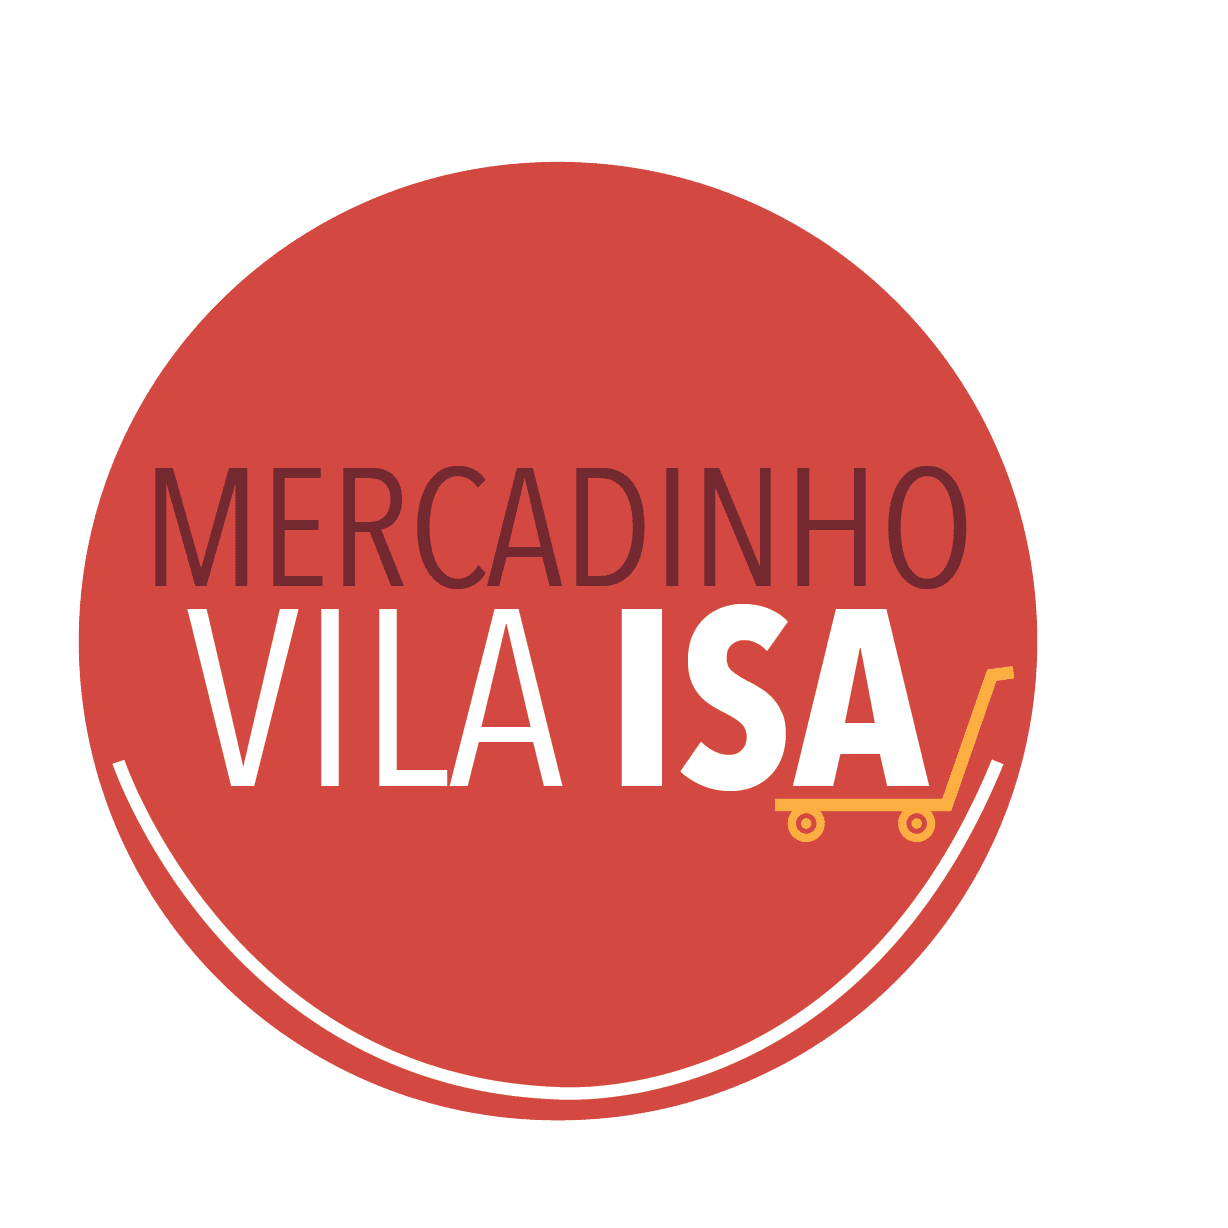 Mercadinho Vila Isa